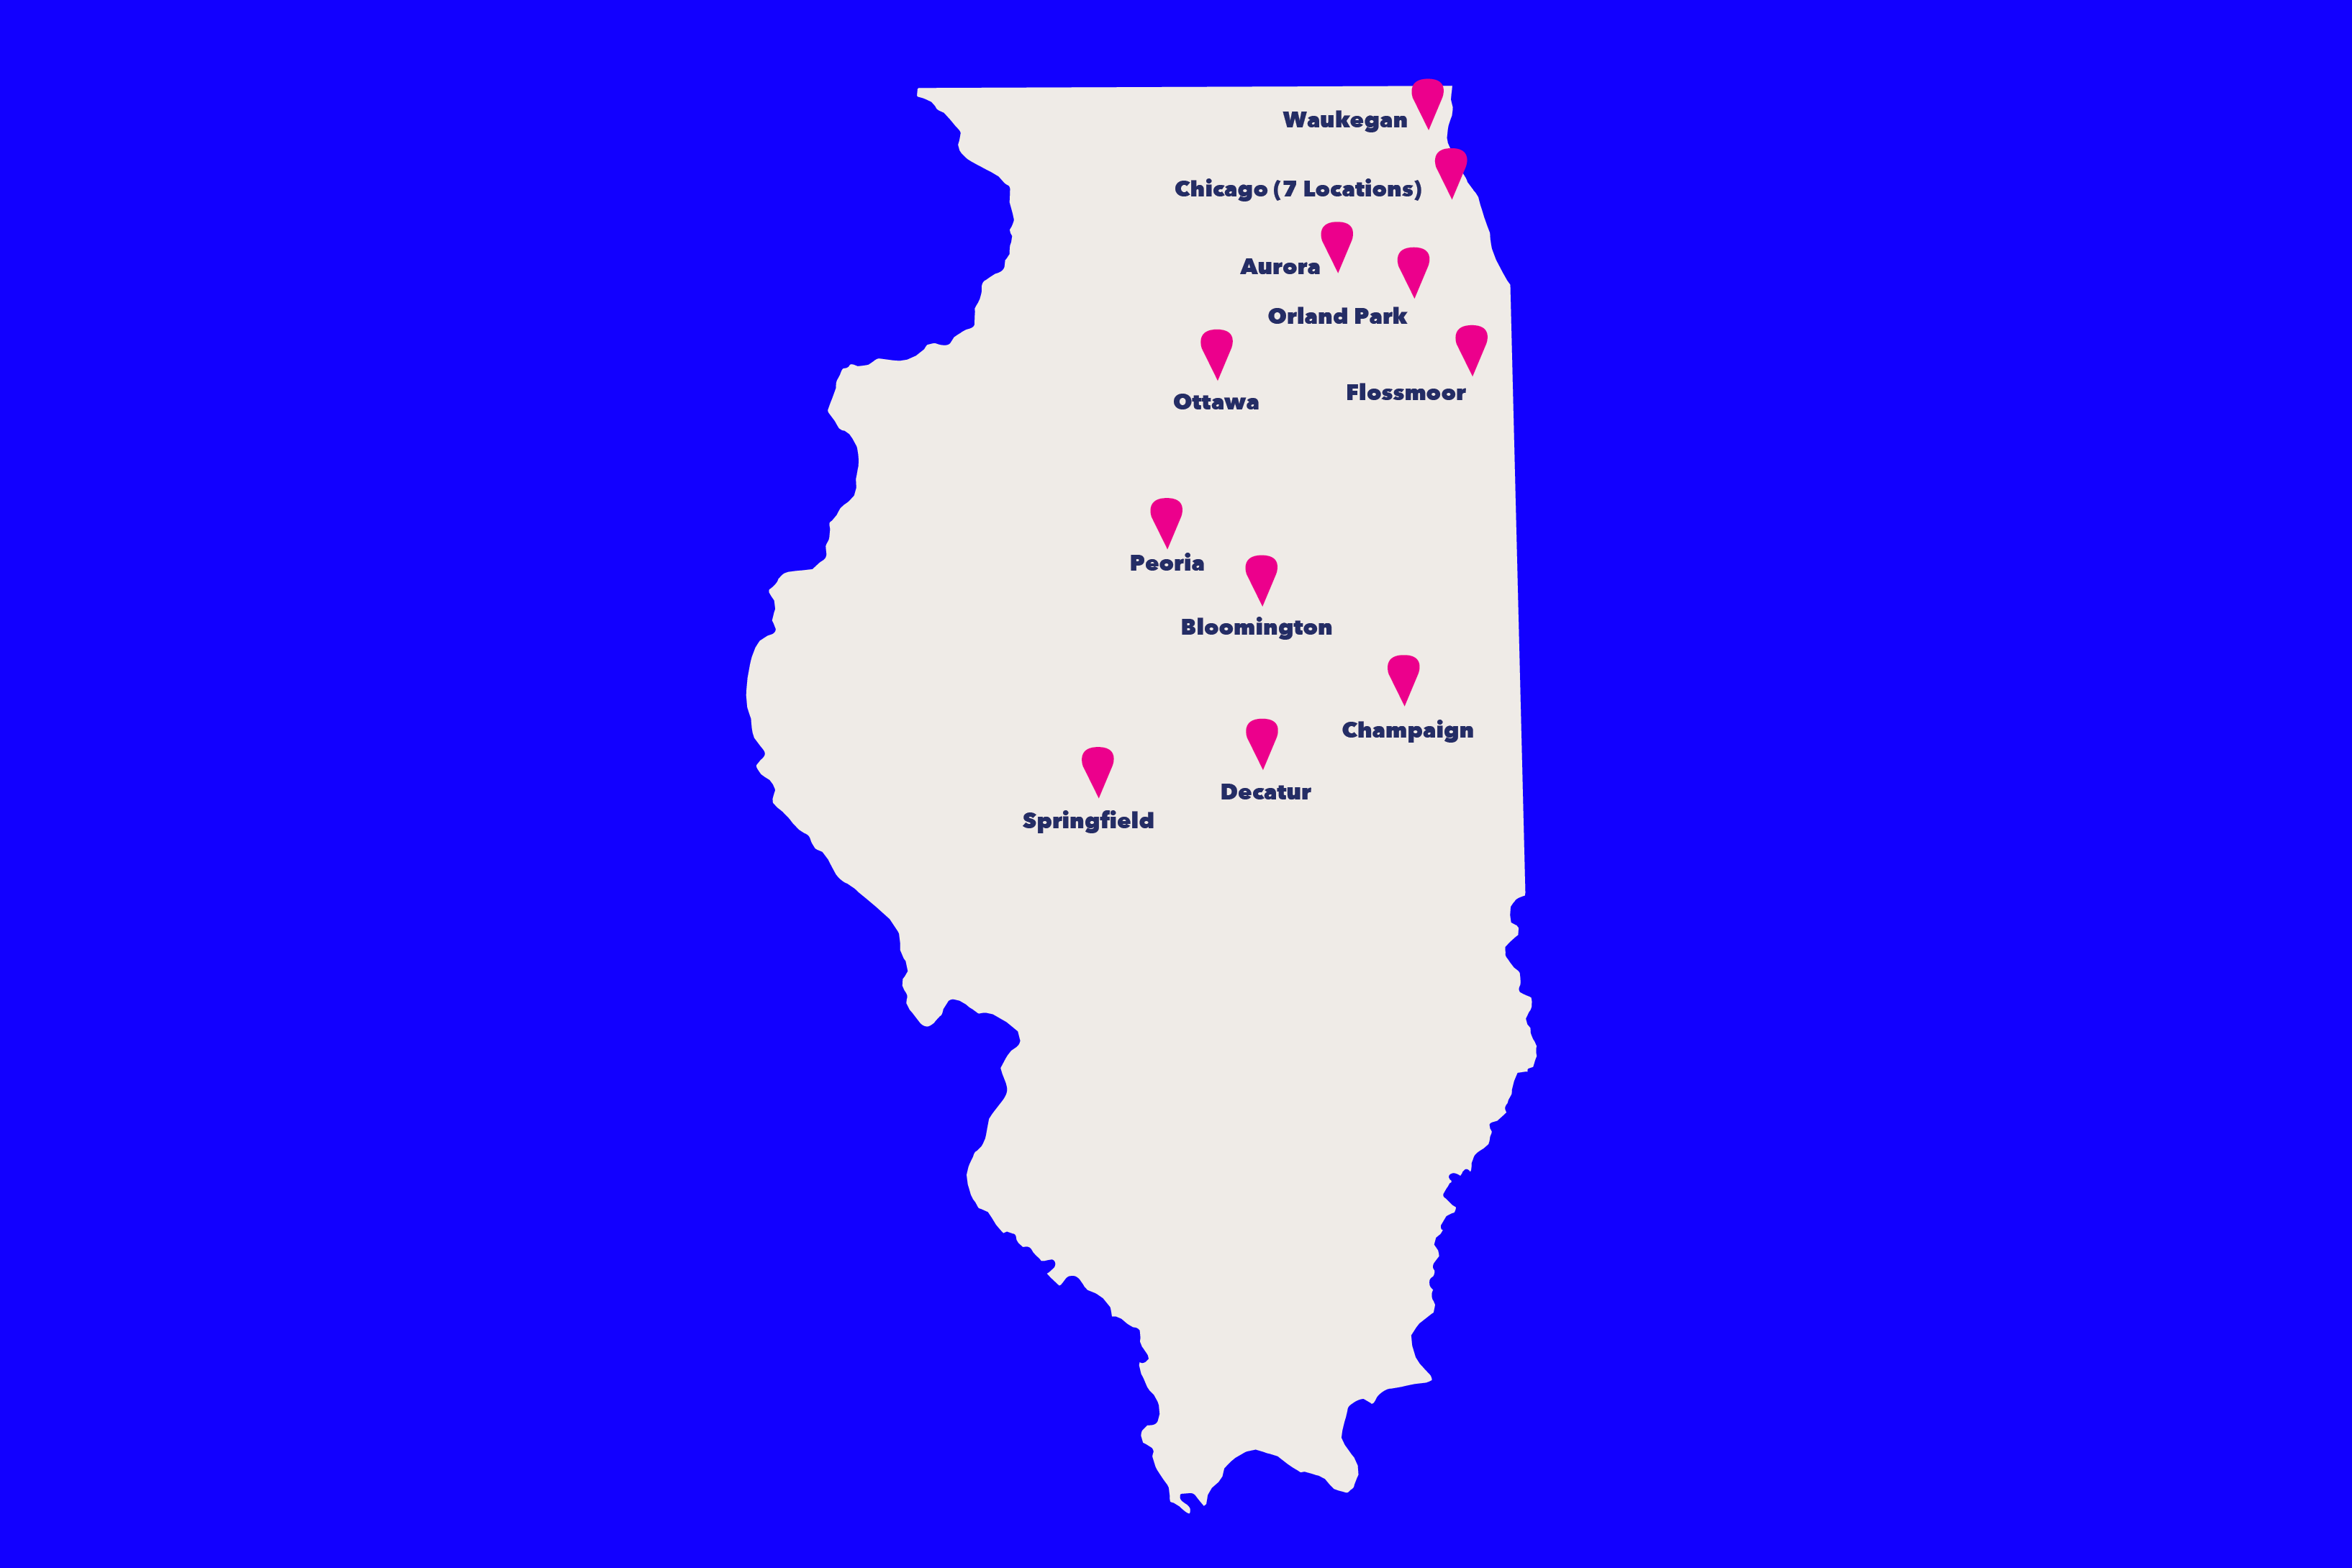 Illinois Planned Parenthood abortion center locations